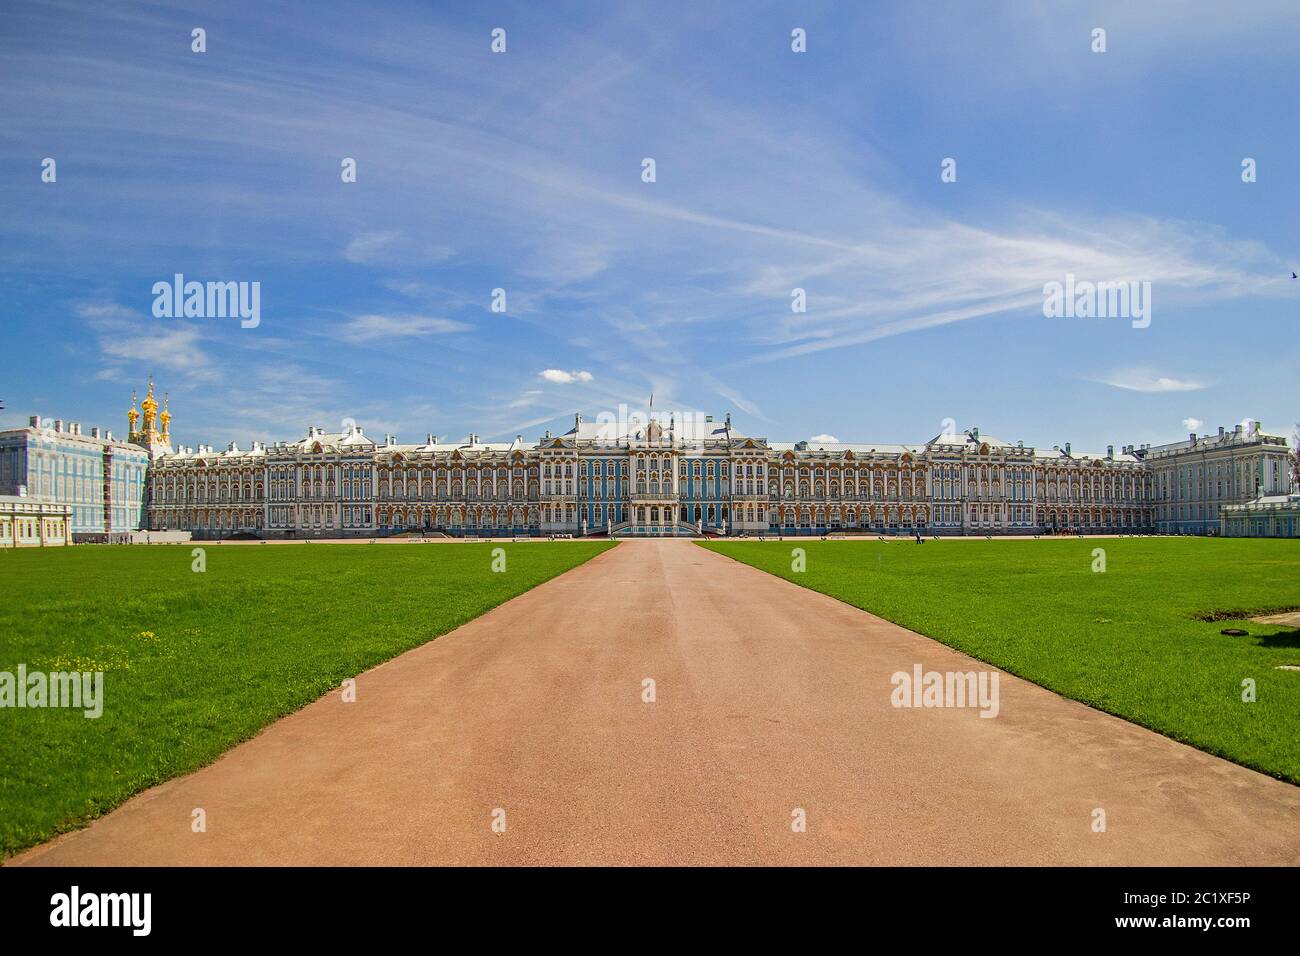 Russia, St. Petersburg - Katarina's Palace Stock Photo